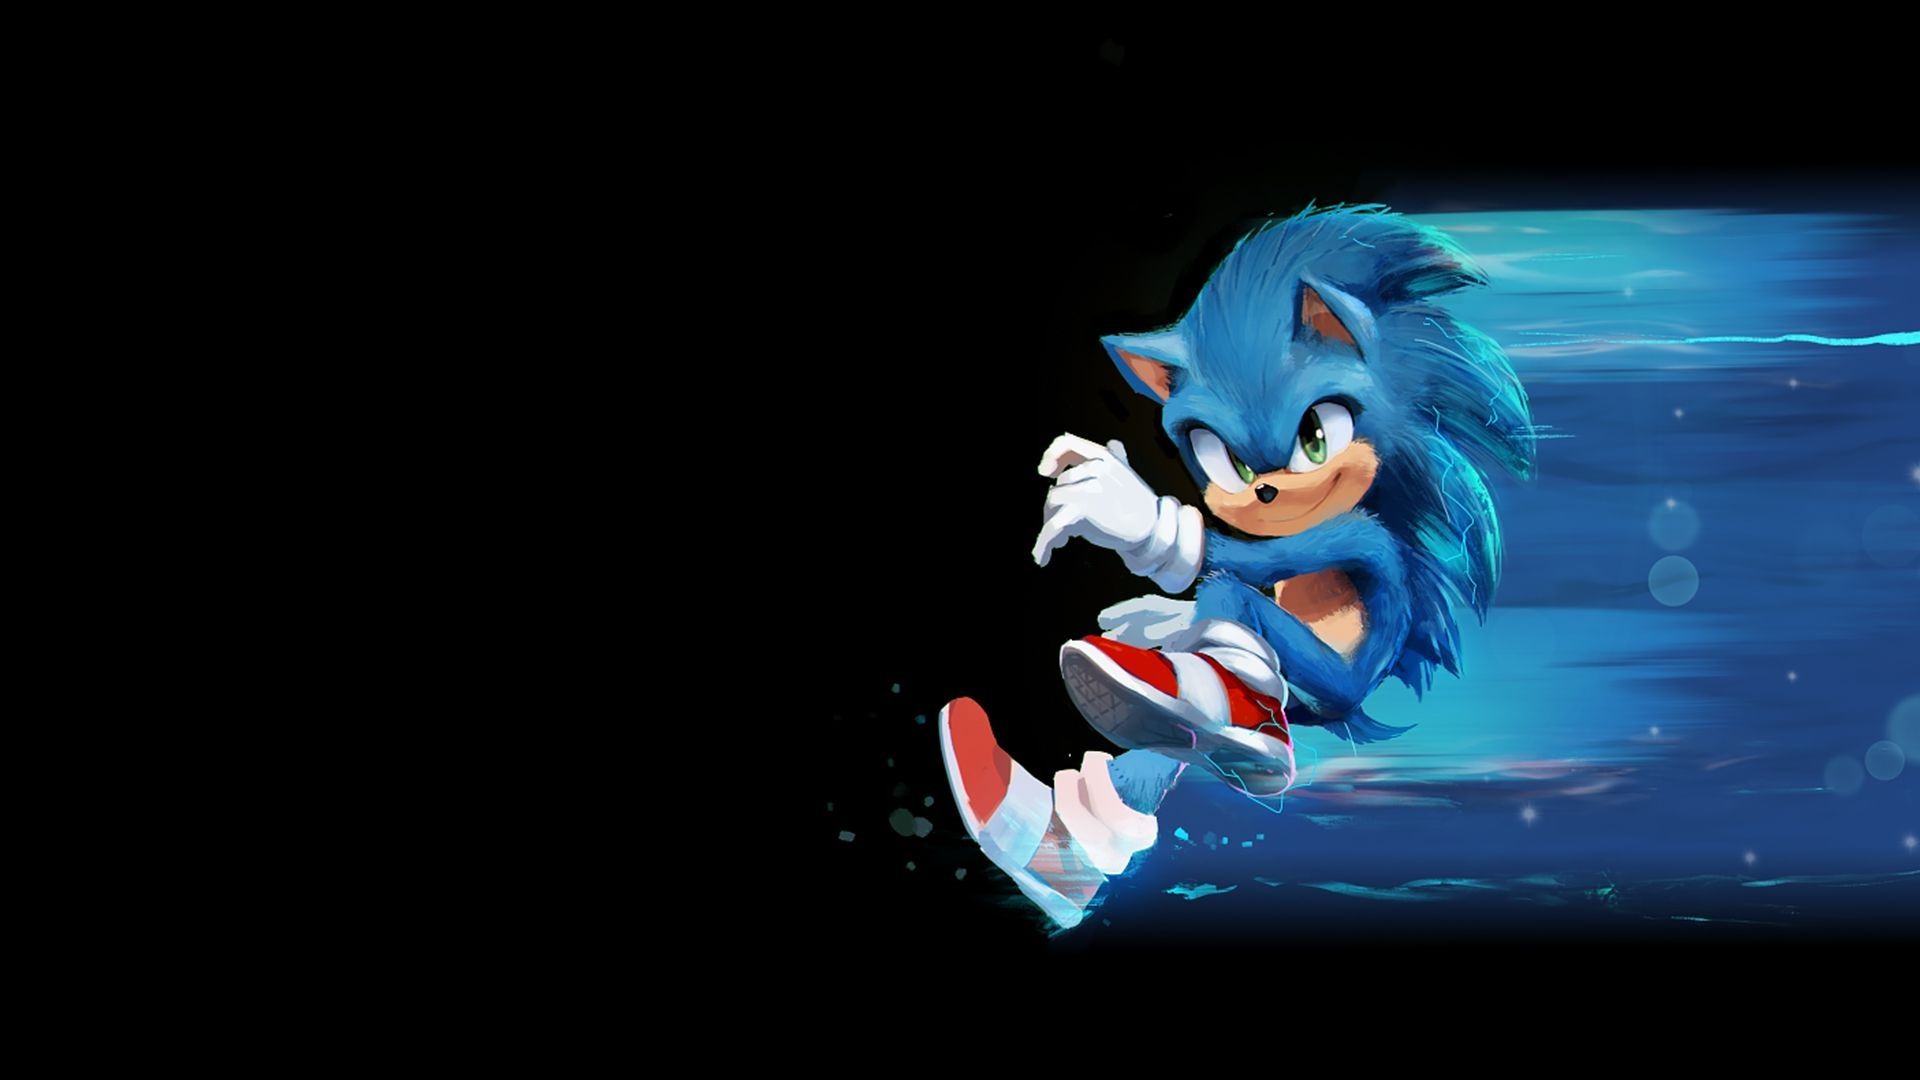 Sonic the Hedgehog 2020 wallpaper 1920x1080 - Sonic